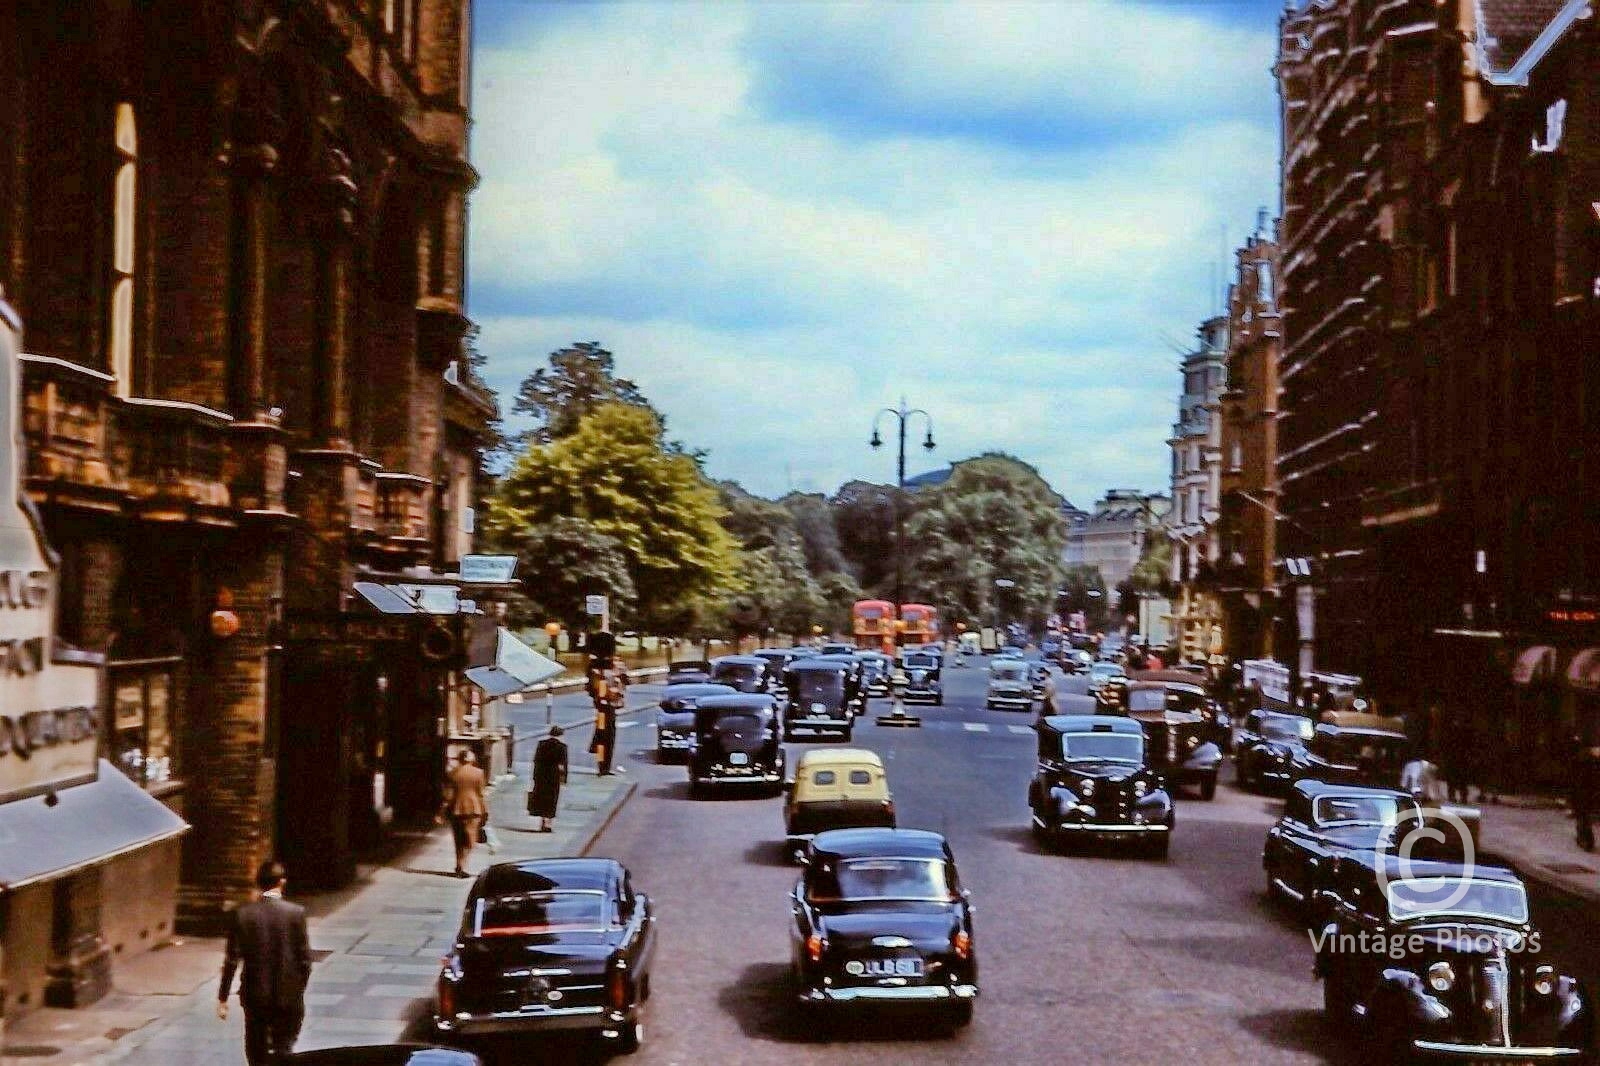 1950s Royal Palace Hotel, Kensington High Street, London July 1958